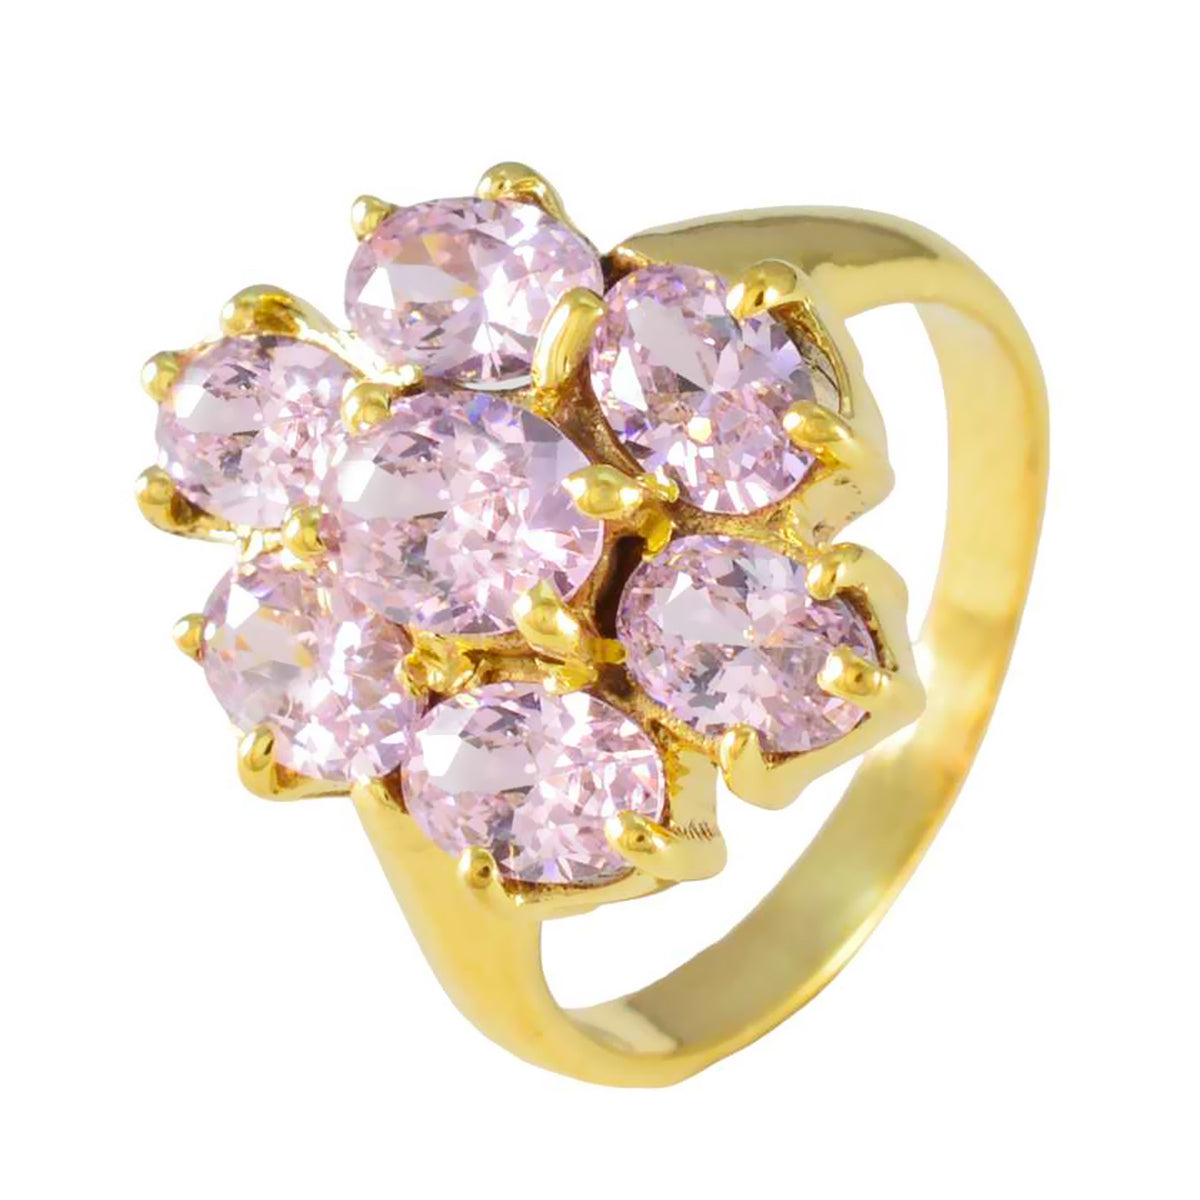 Riyo Quantitative Silver Ring With Yellow Gold Plating Pink CZ Stone Oval Shape Prong Setting Bridal Jewelry Black Friday Ring